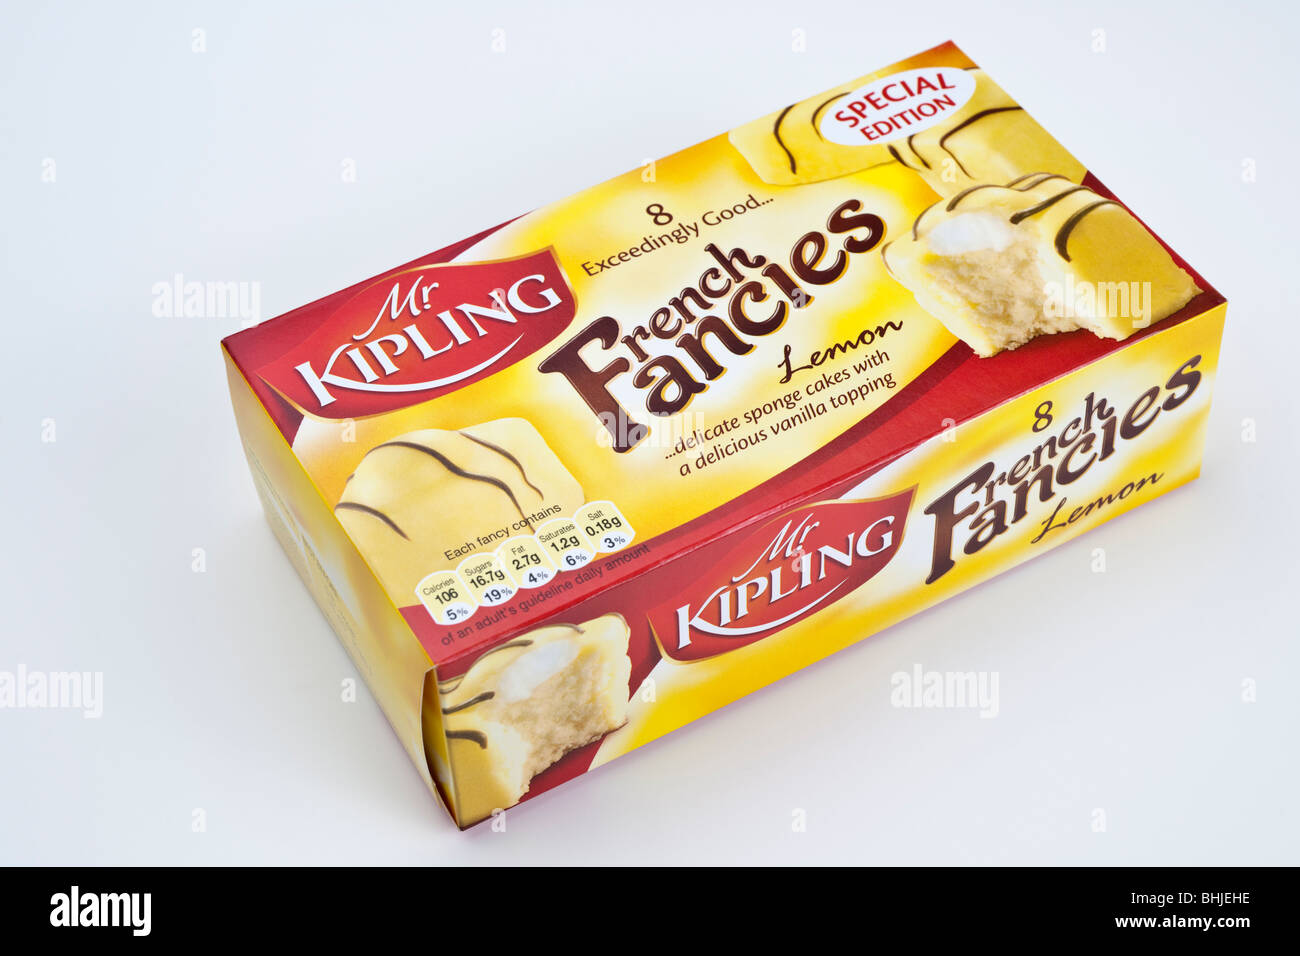 Box of 8 Mr Kipling Lemon French Fancies sponge cakes with vanilla topping Stock Photo